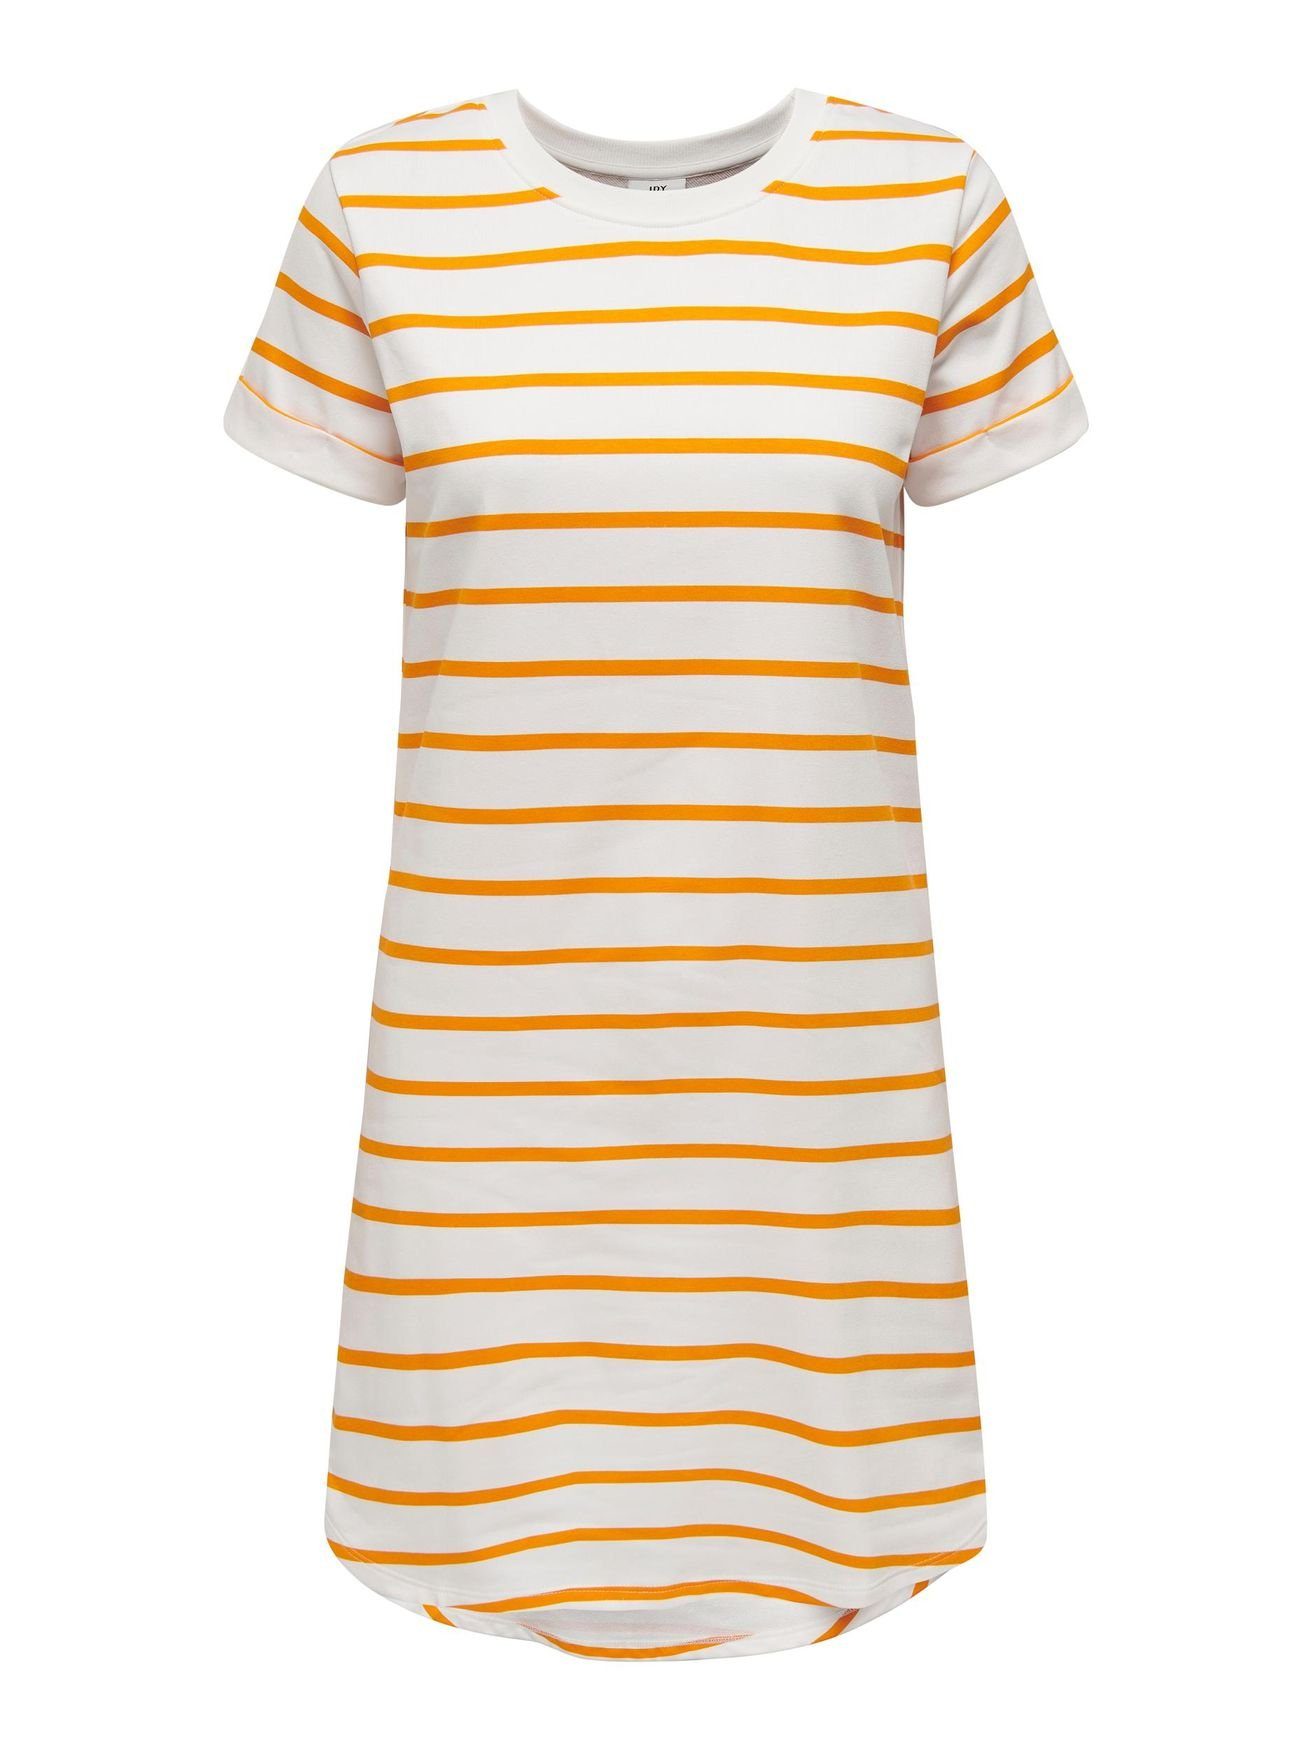 JACQUELINE de YONG Shirtkleid Kurzes T-Shirt Kleid Knielang Gestreift JDYIVY (knielang) 4989 in Orange